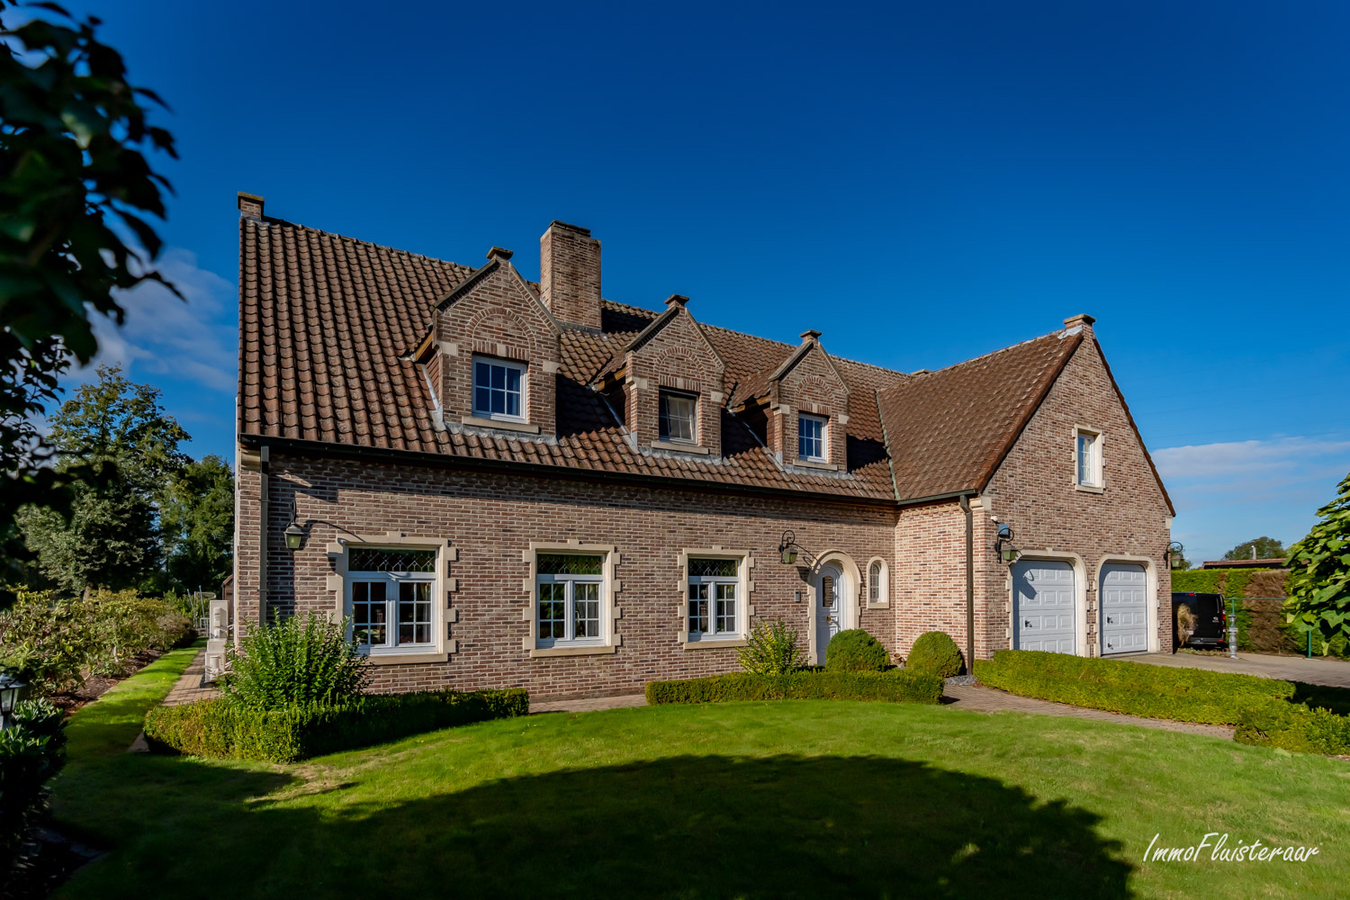 Property for sale in Beringen